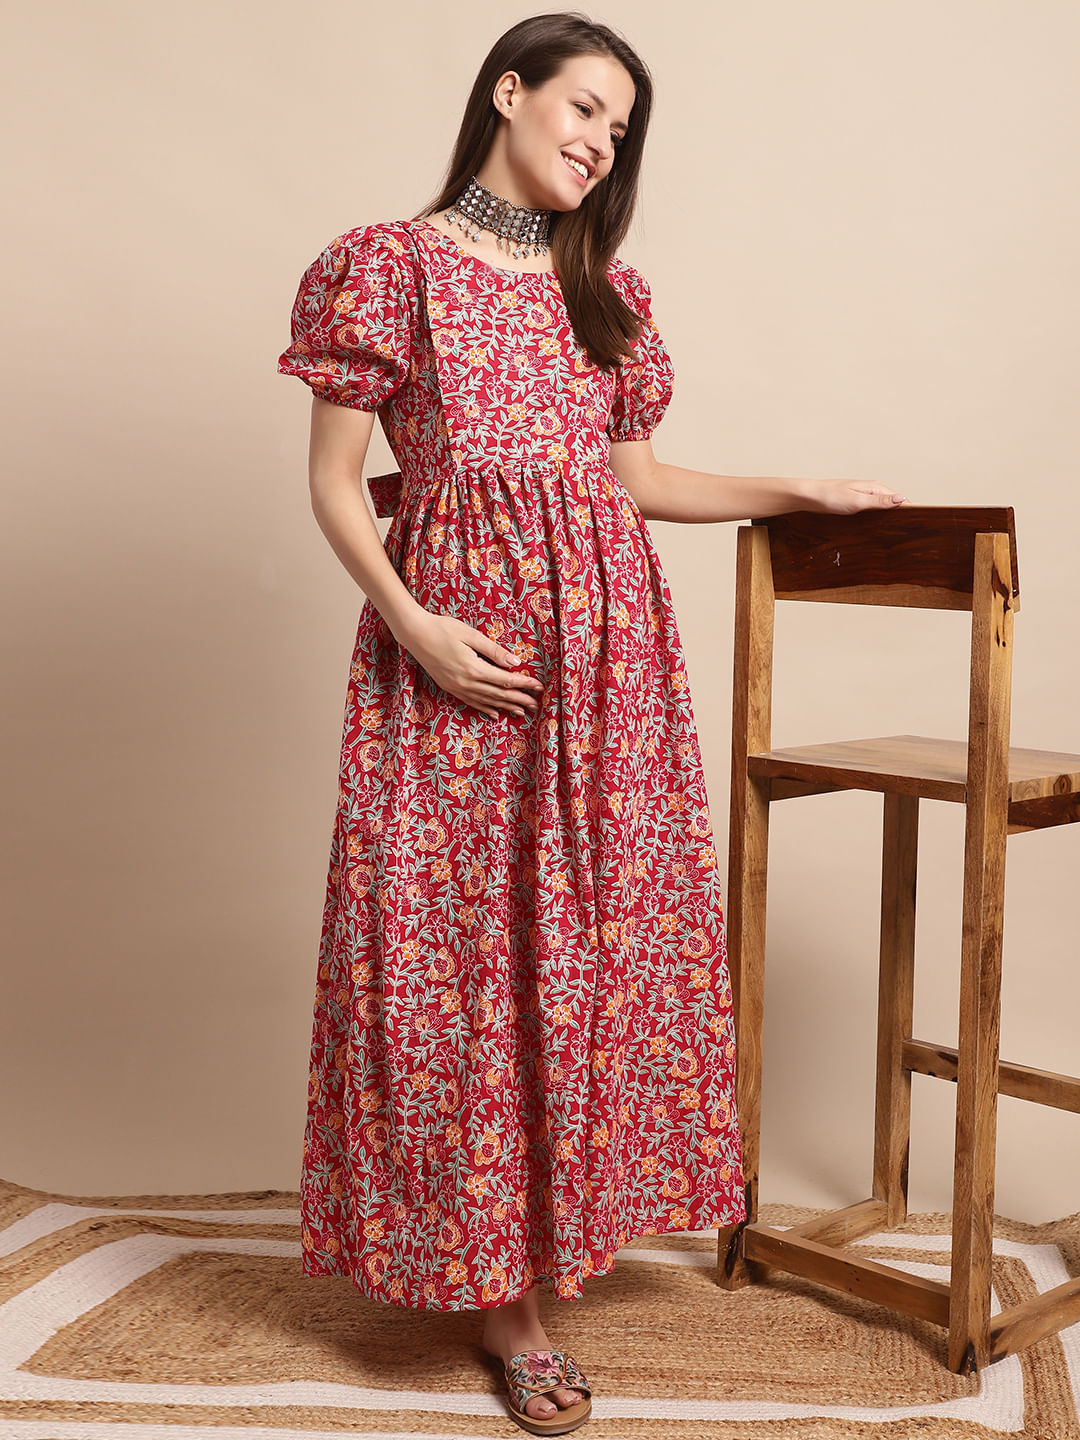 Floral maternity dress